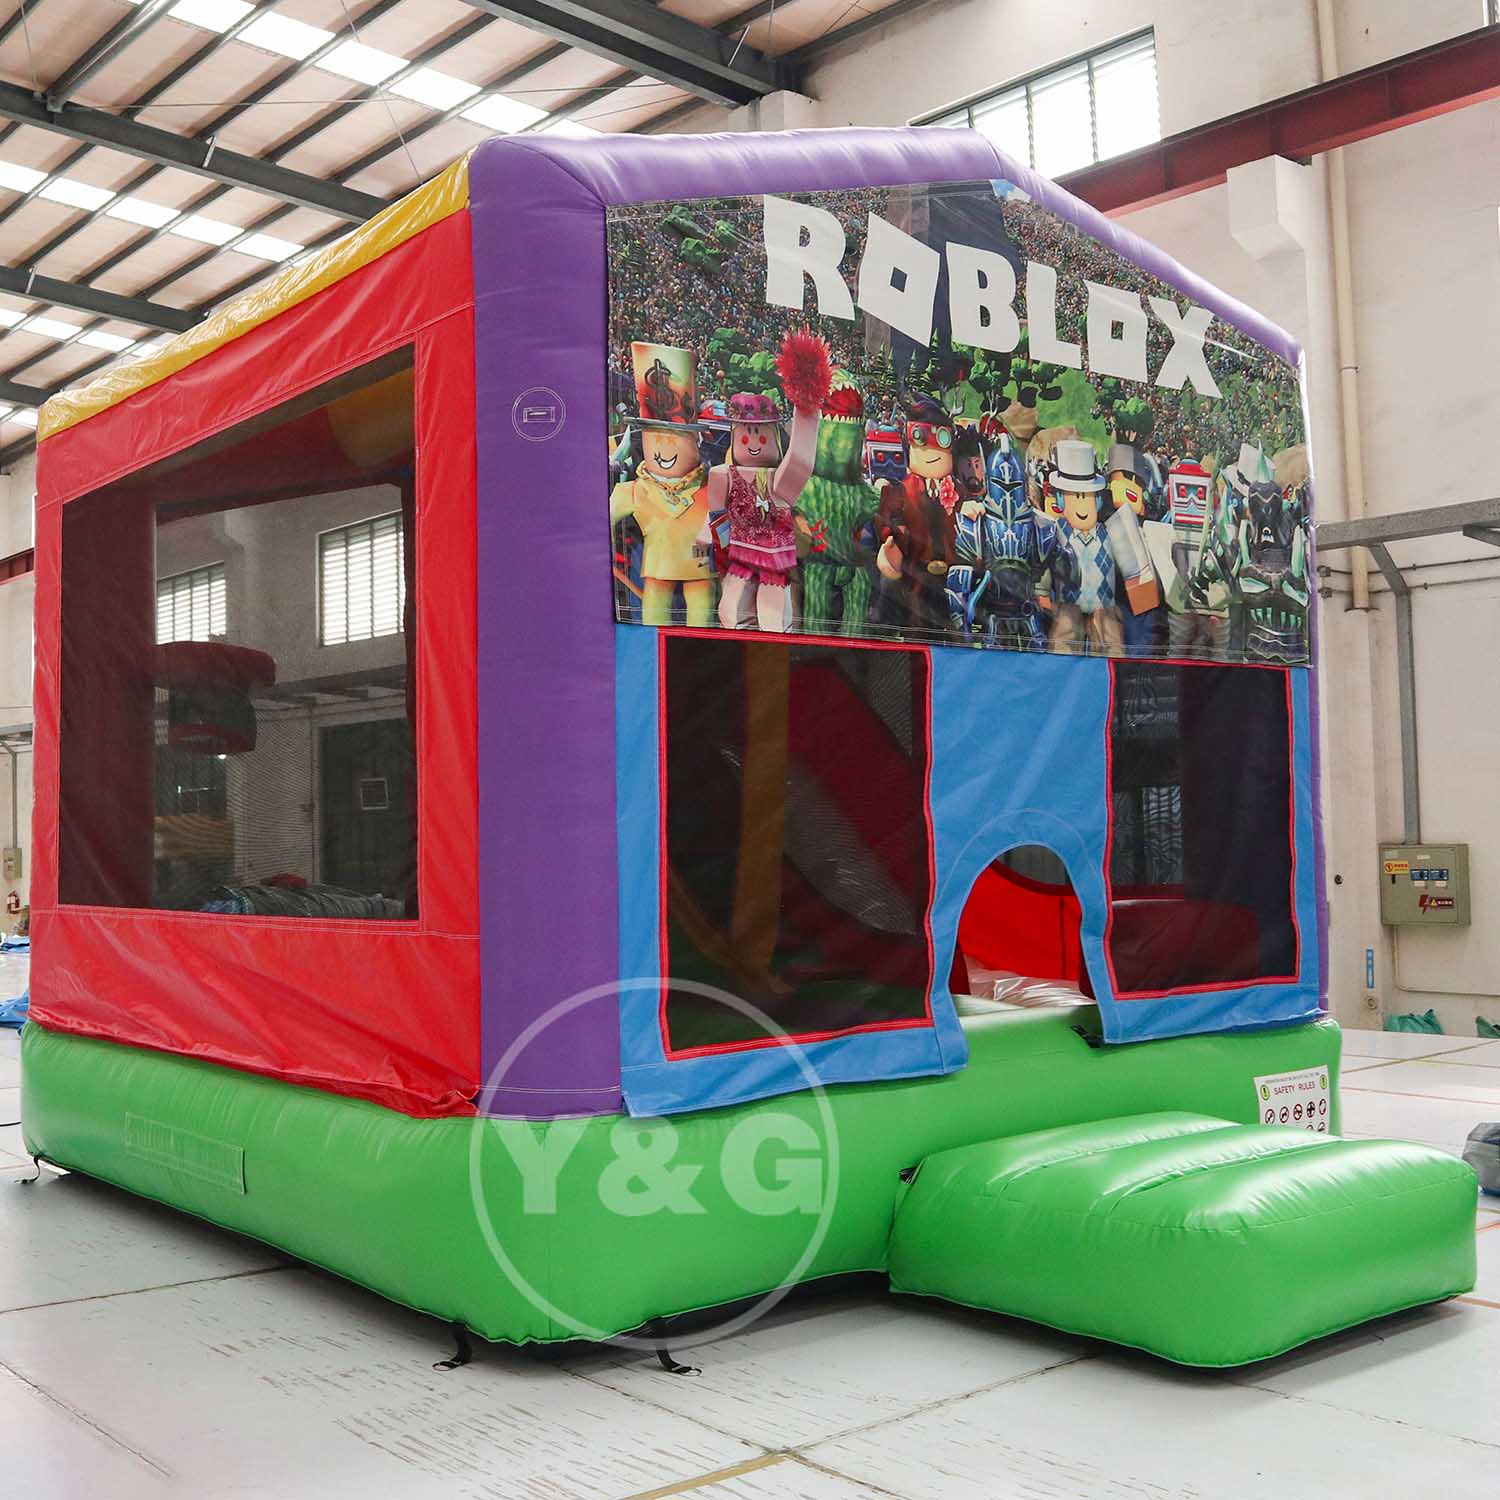 Robot Themed Inflatable Bounce HouseYG-153